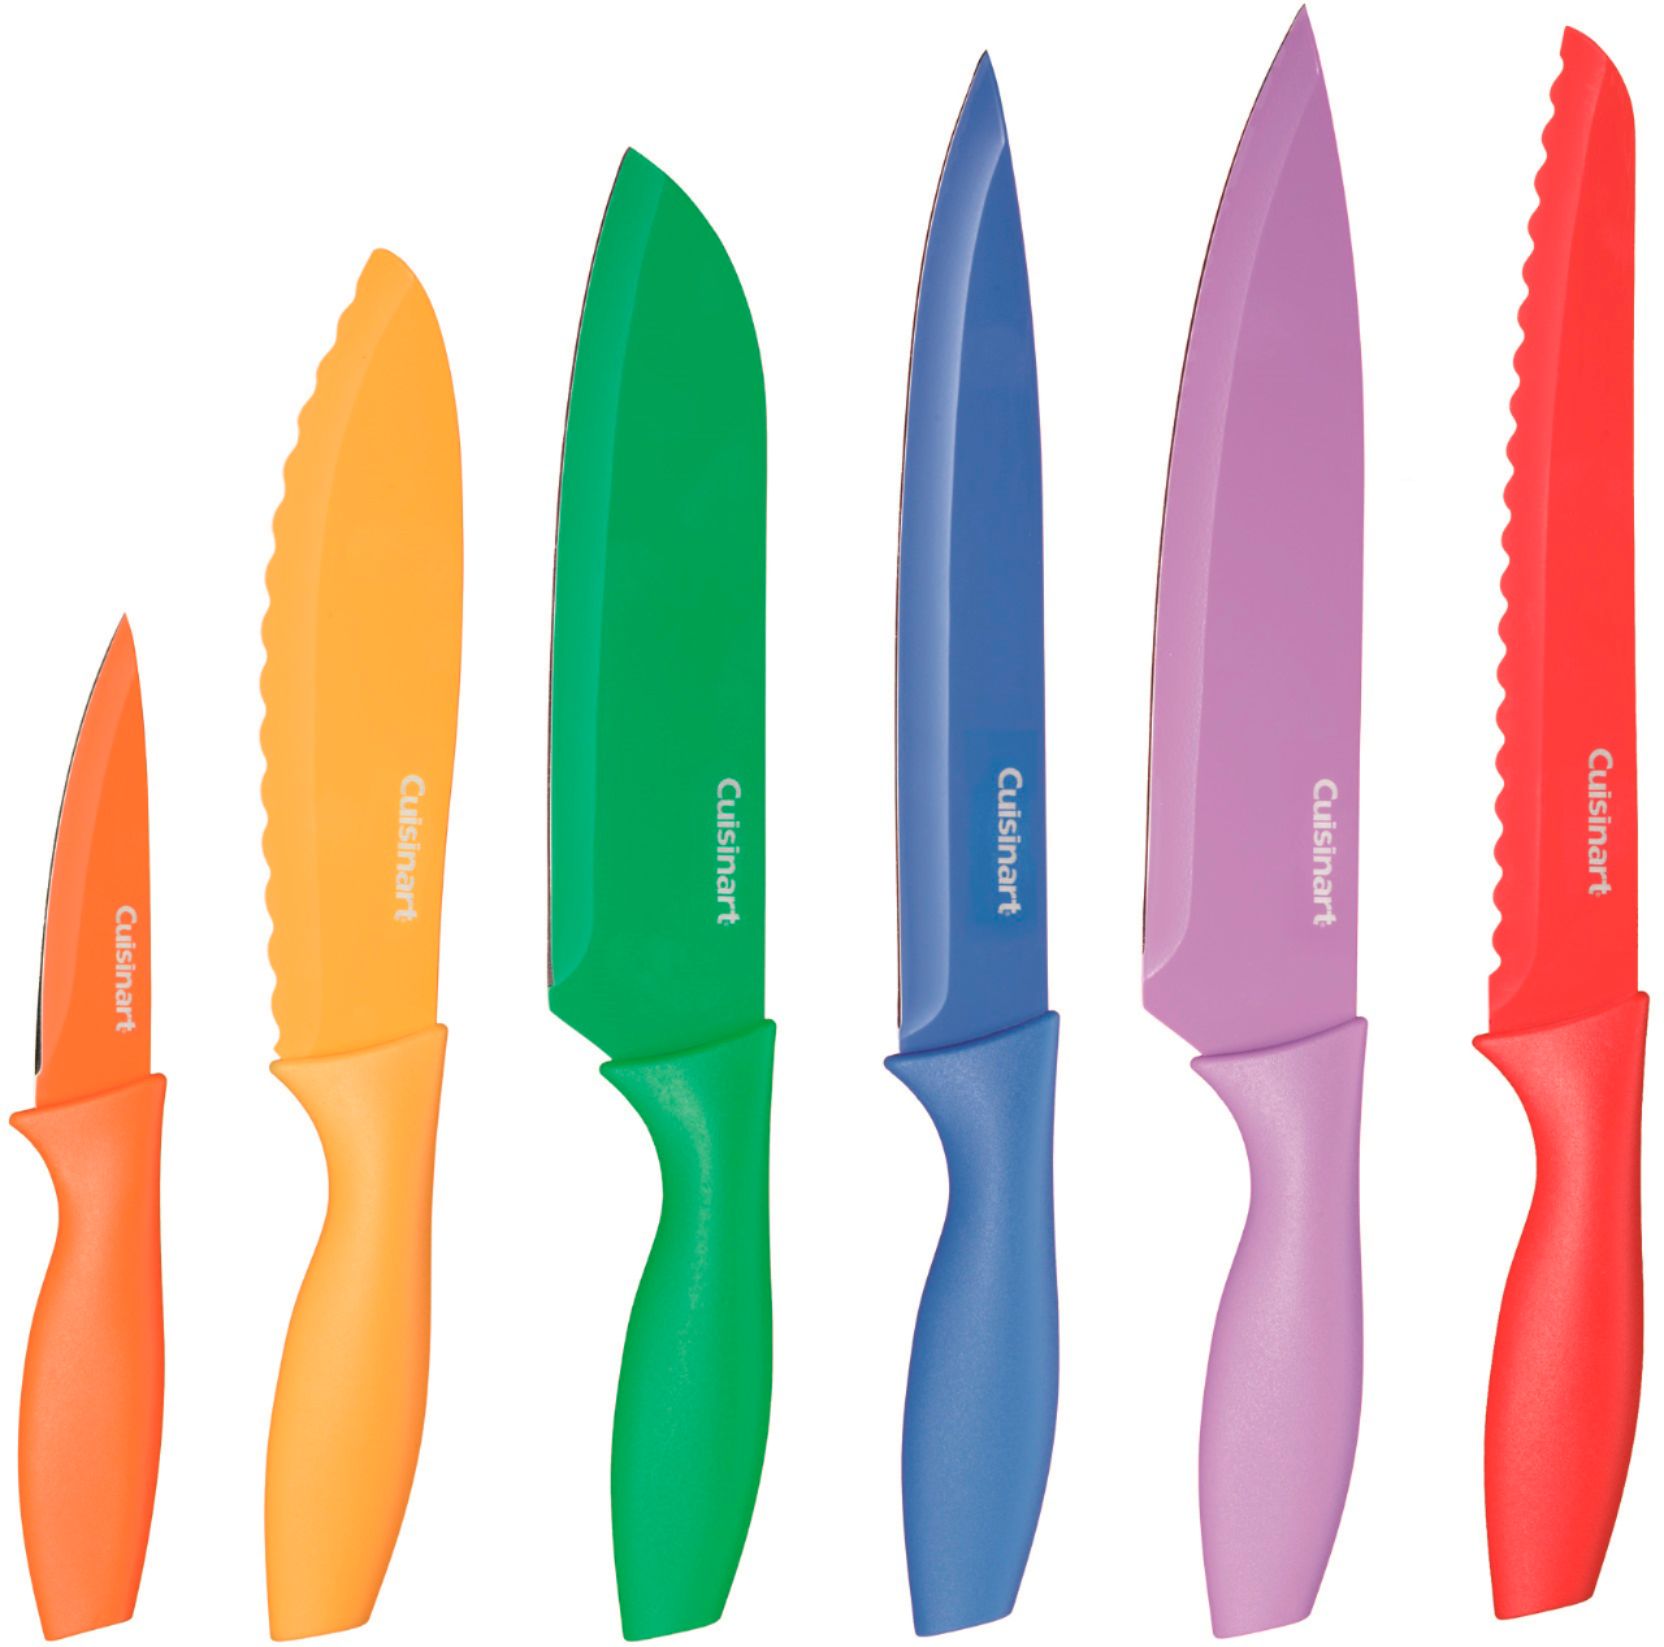 Cuisinart - 12 PC Knife Set - Multi $14.99 + Free Shipping